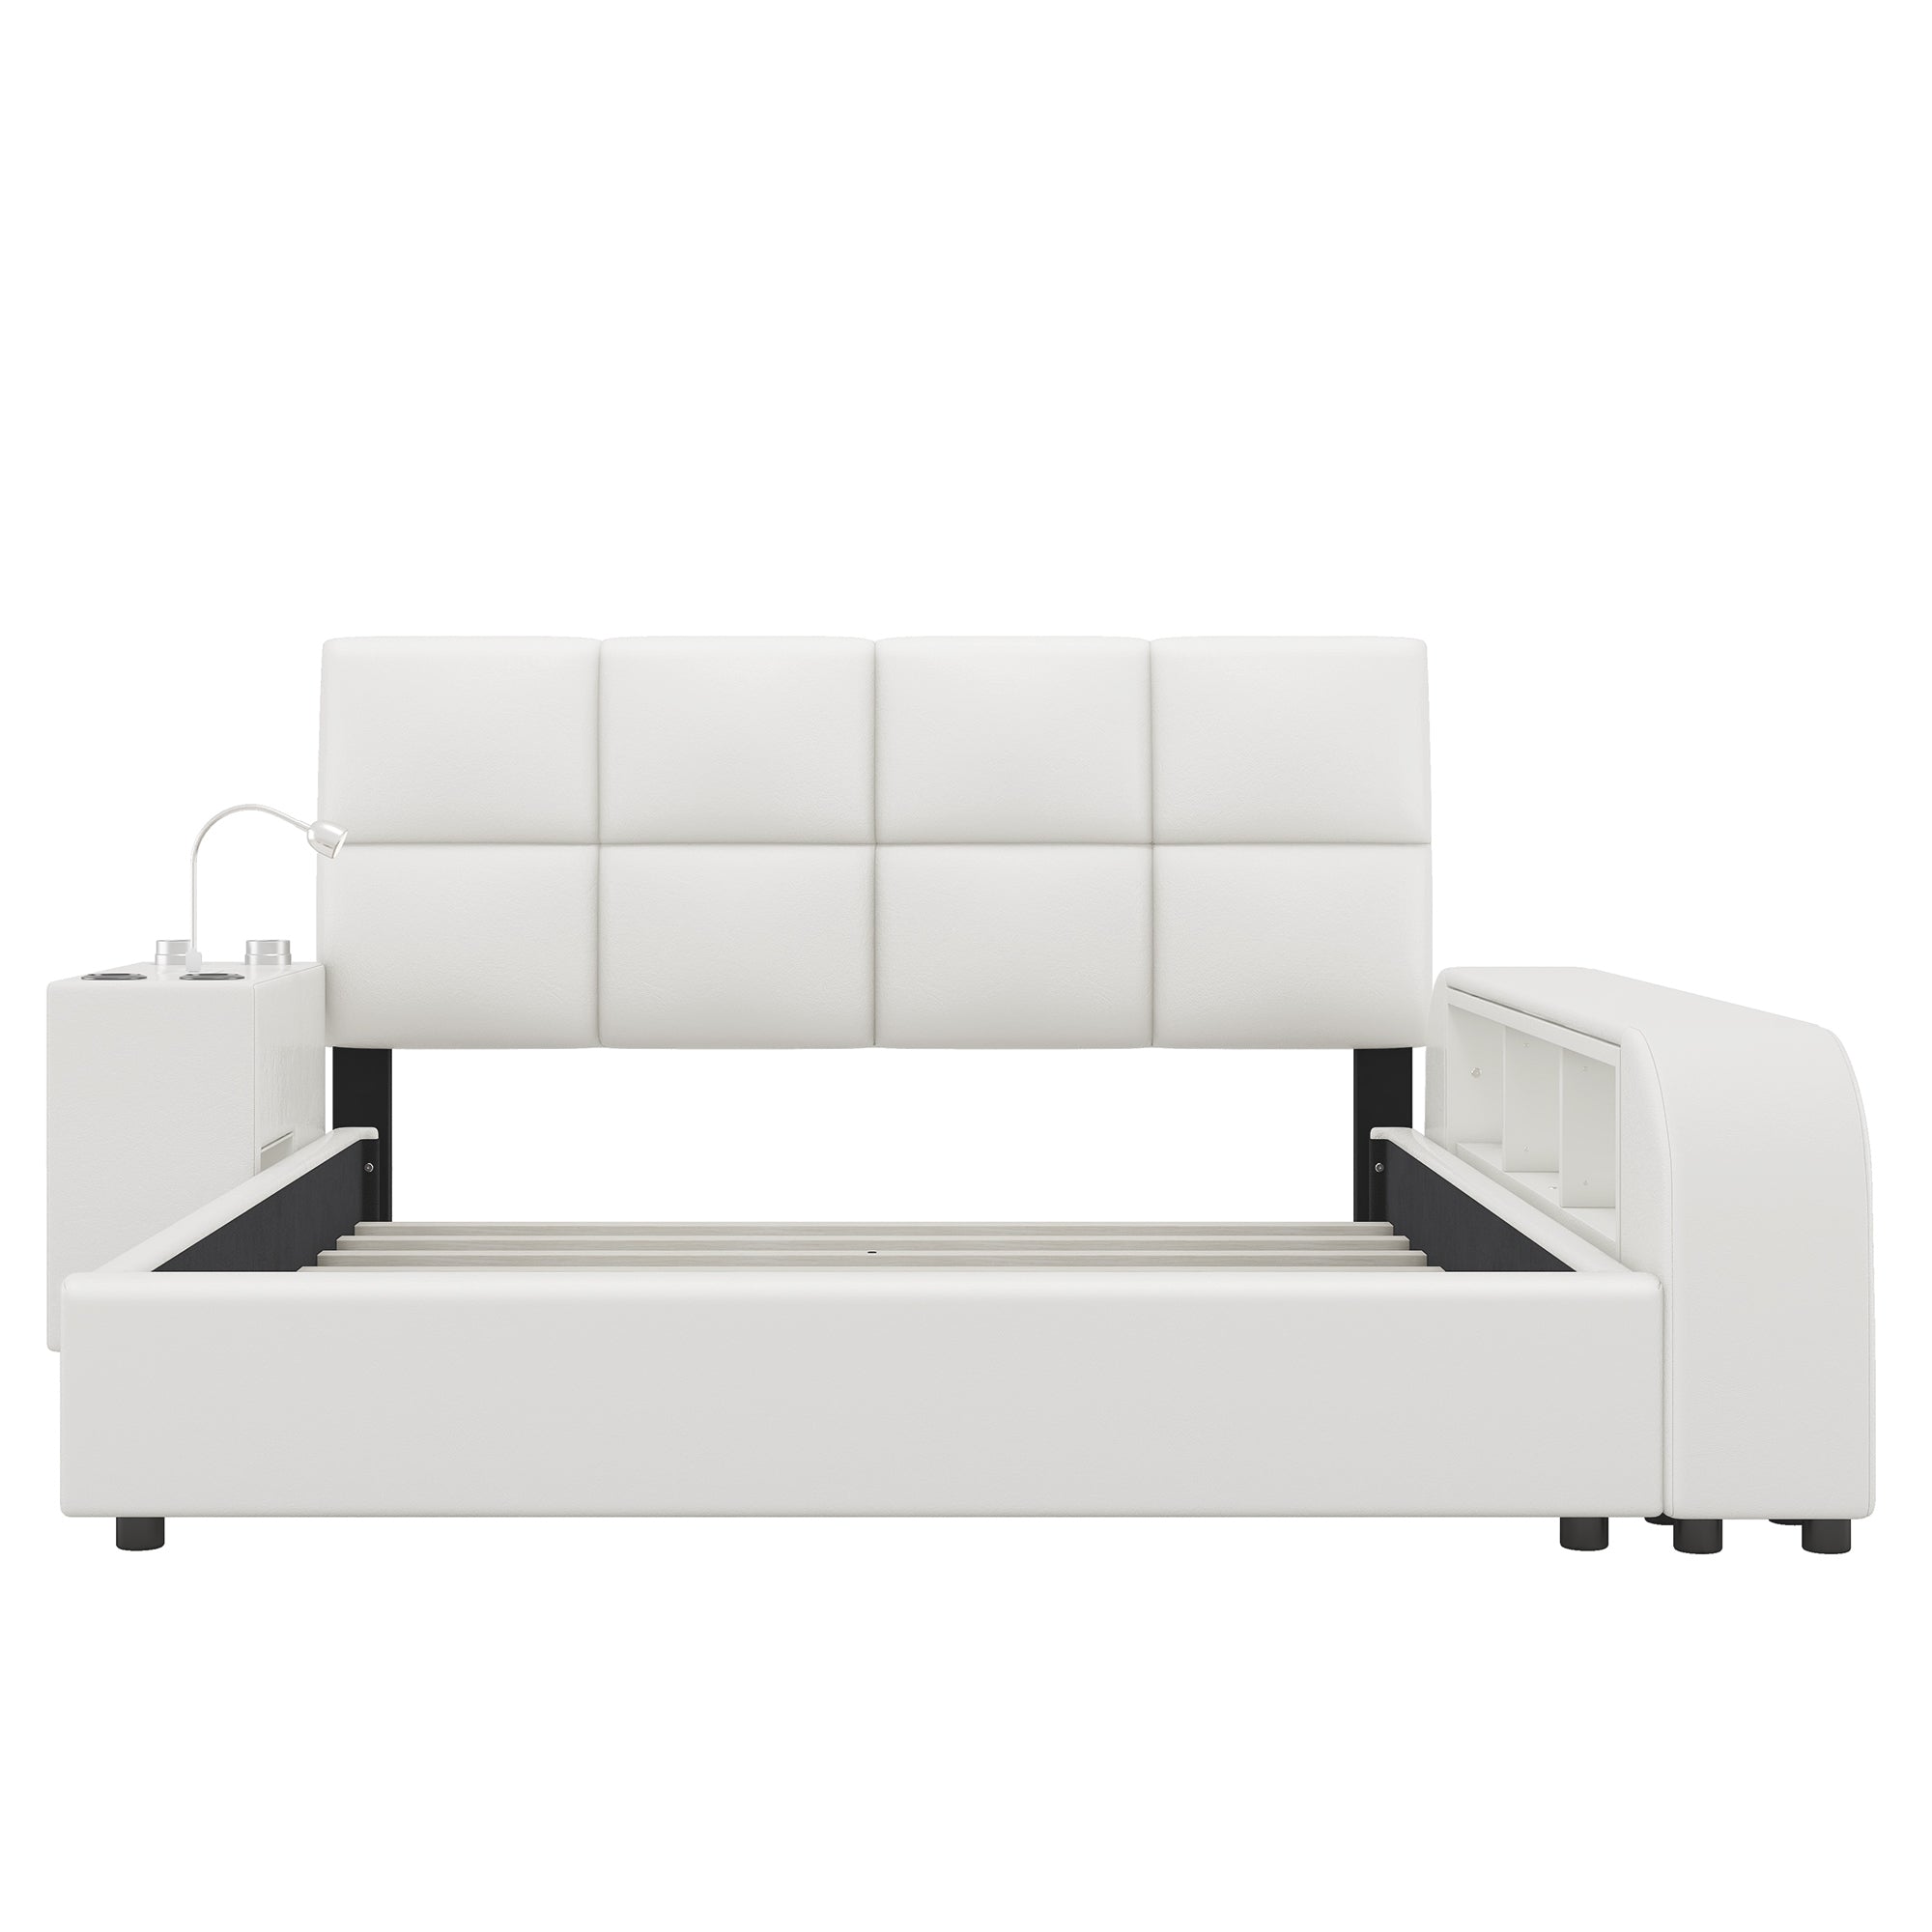 Bellemave® Queen Size Upholstered Platform Bed with Multimedia Nightstand and Storage Shelves Bellemave®